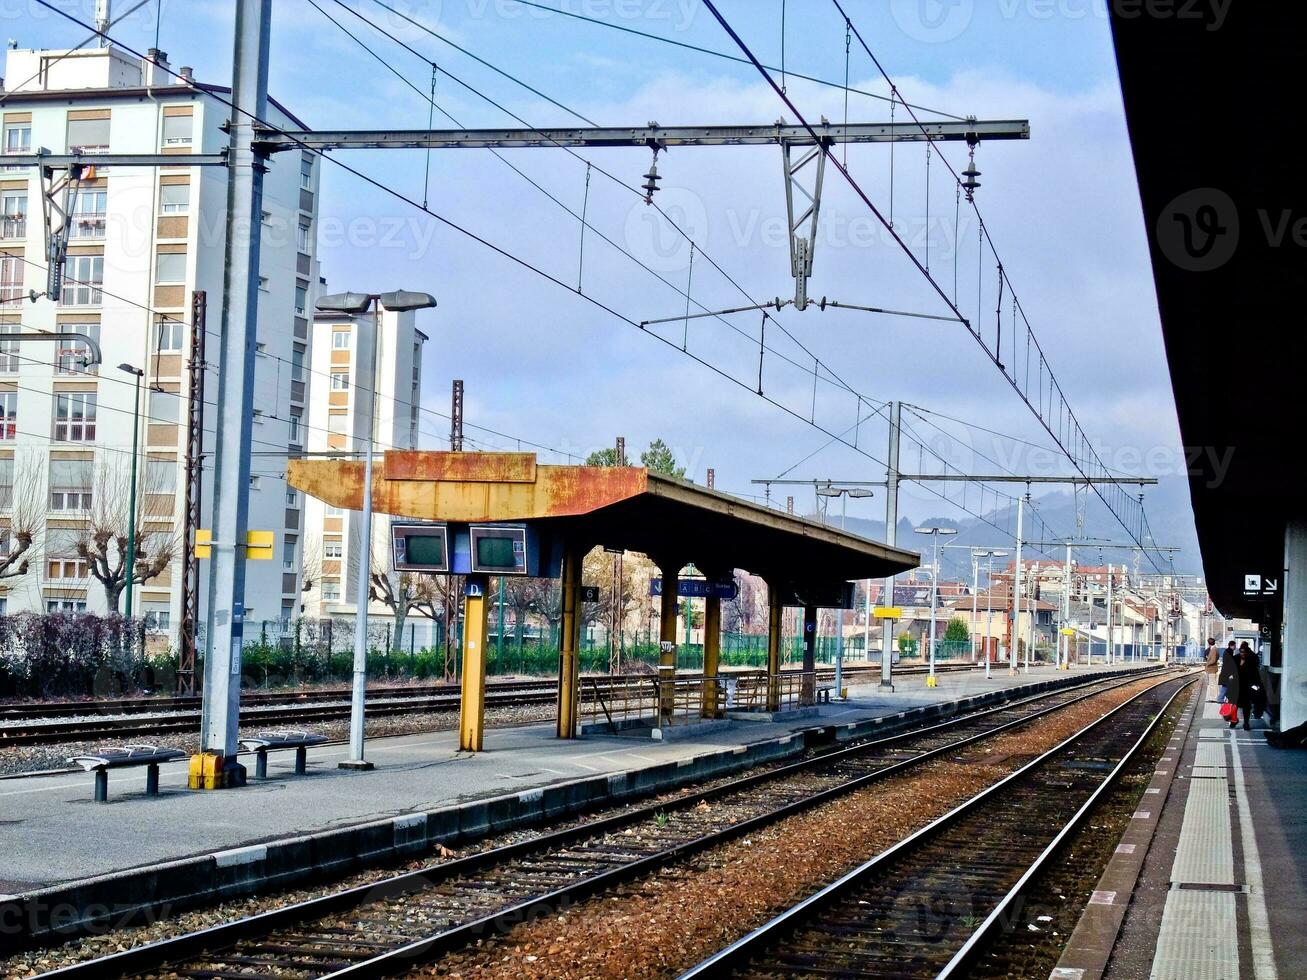 kamerachtig spoorweg station in savoie, Frankrijk foto